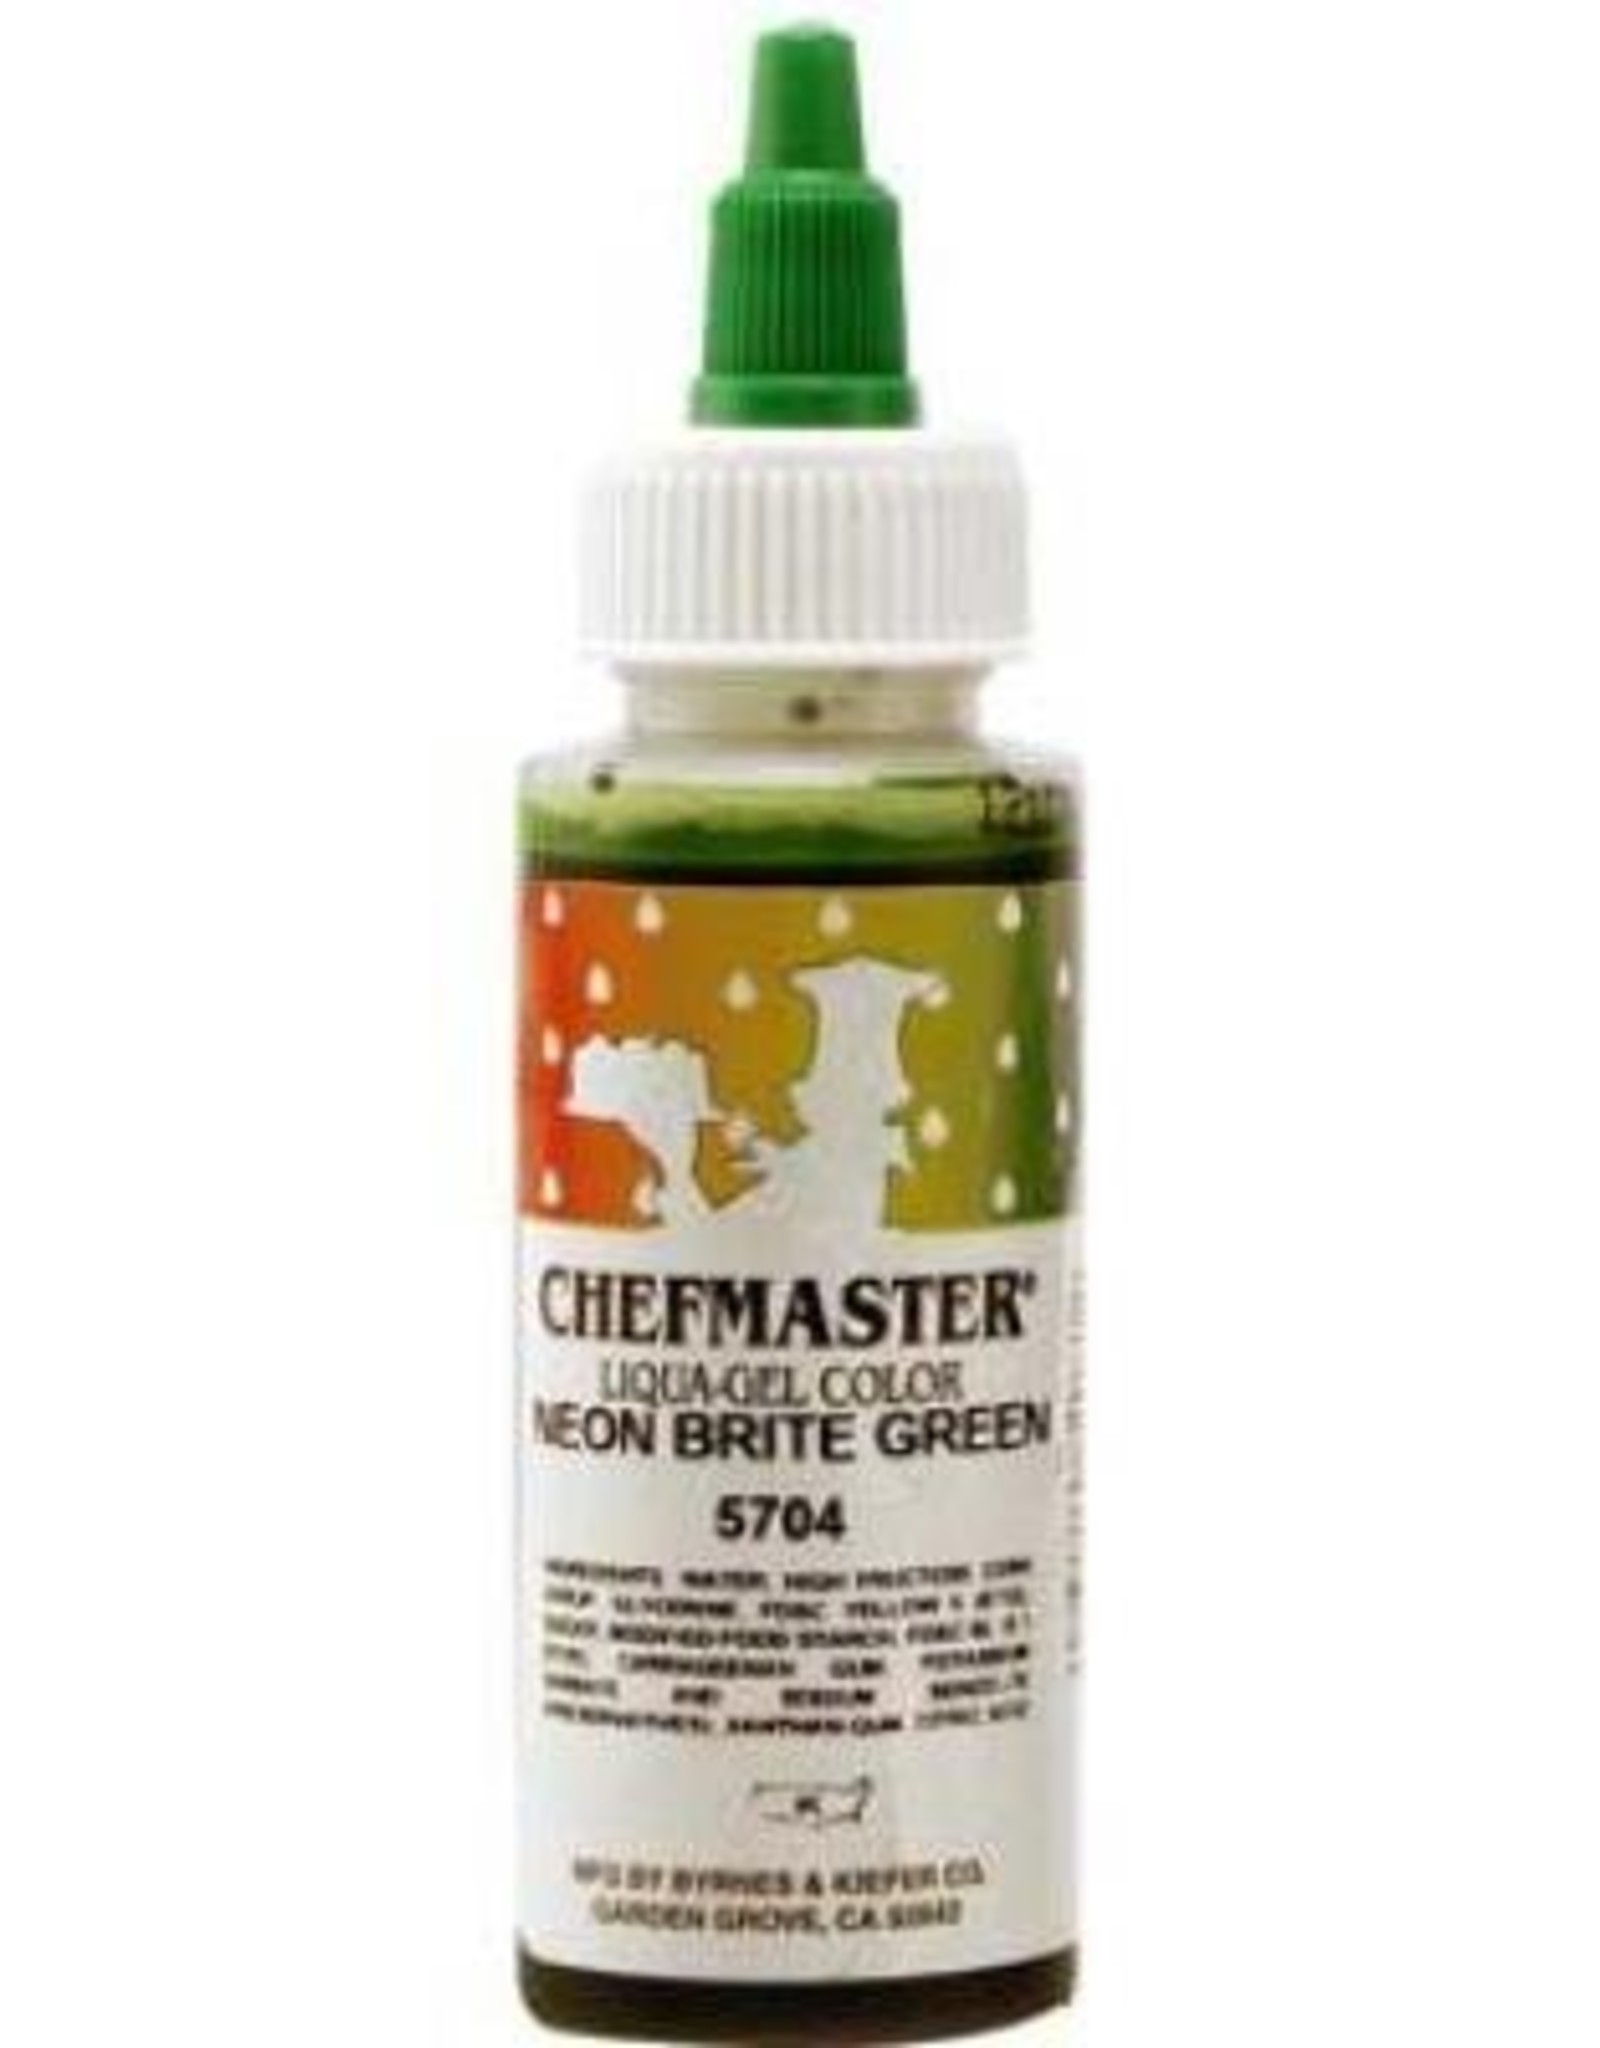 Neon Green Chefmaster Liqua-gel 2.3 ounce